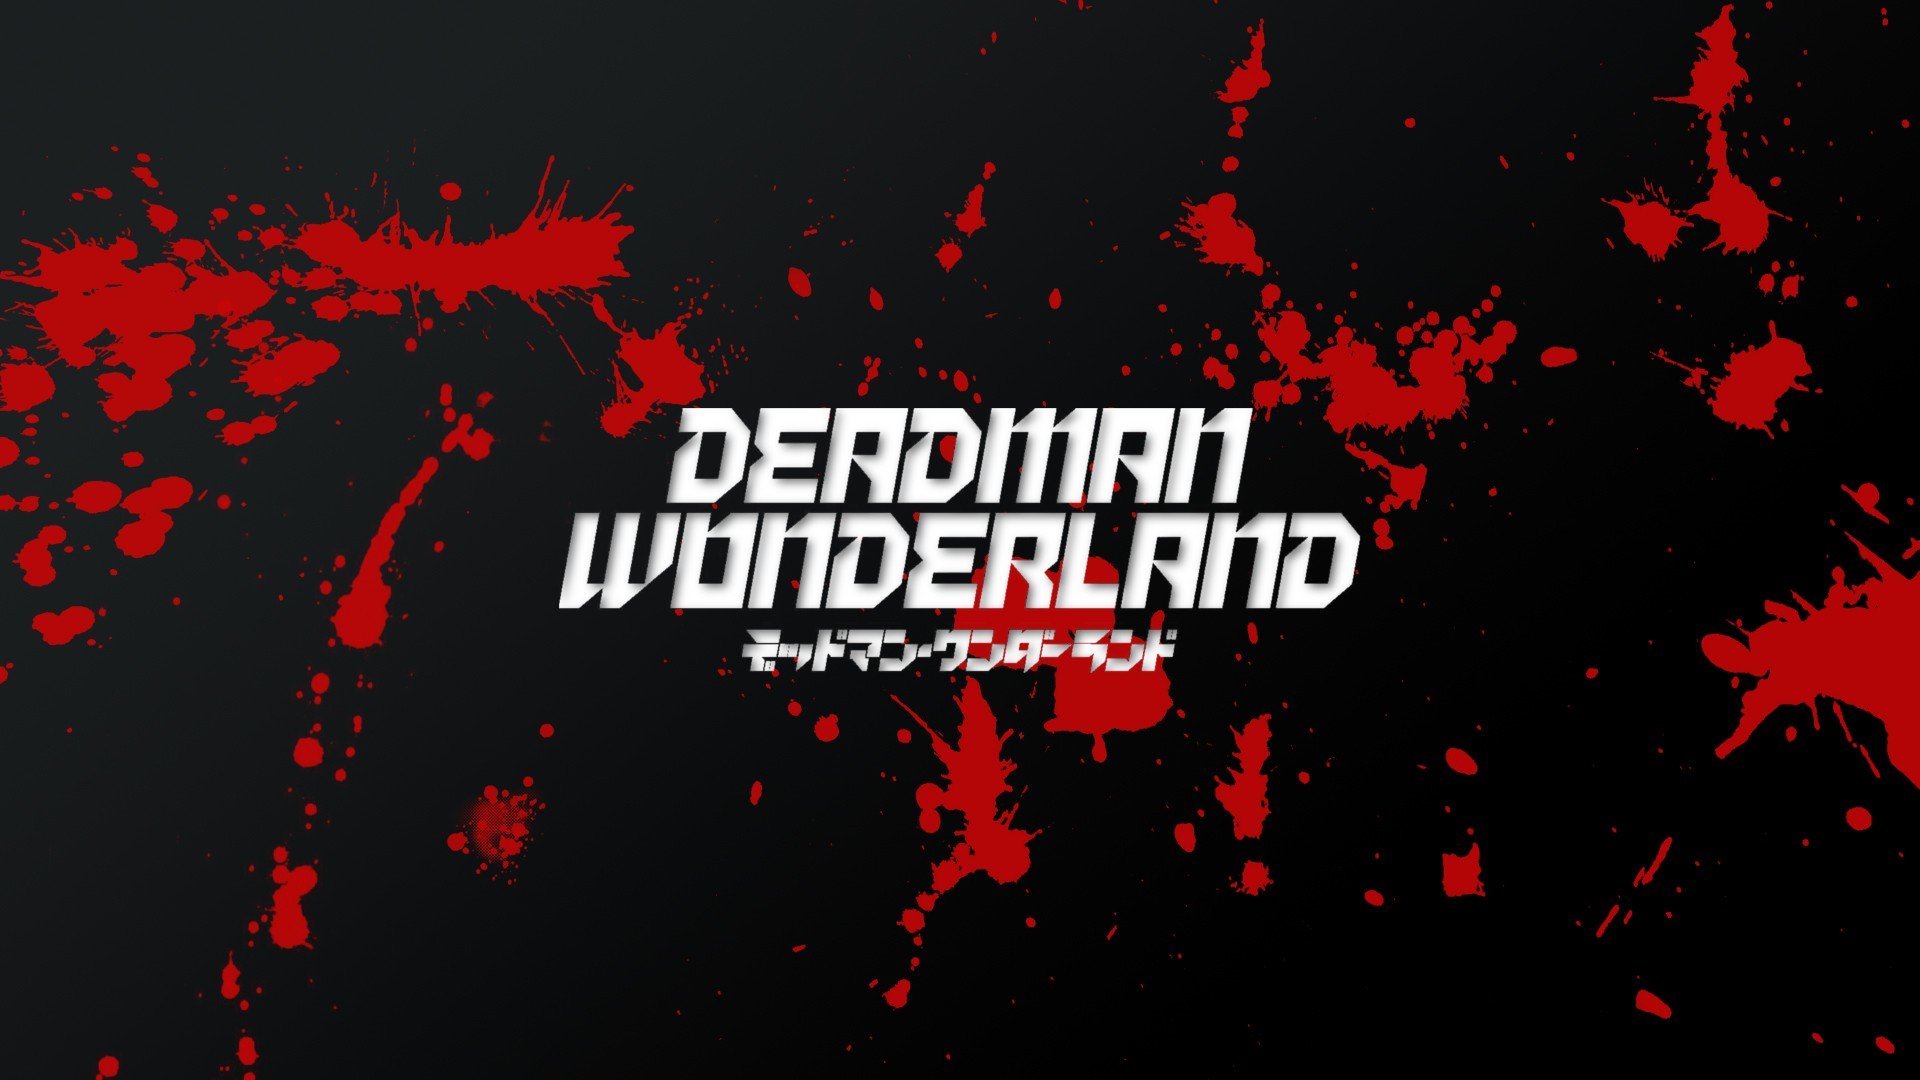 Deadman Wonderland 1920X1080 Wallpapers